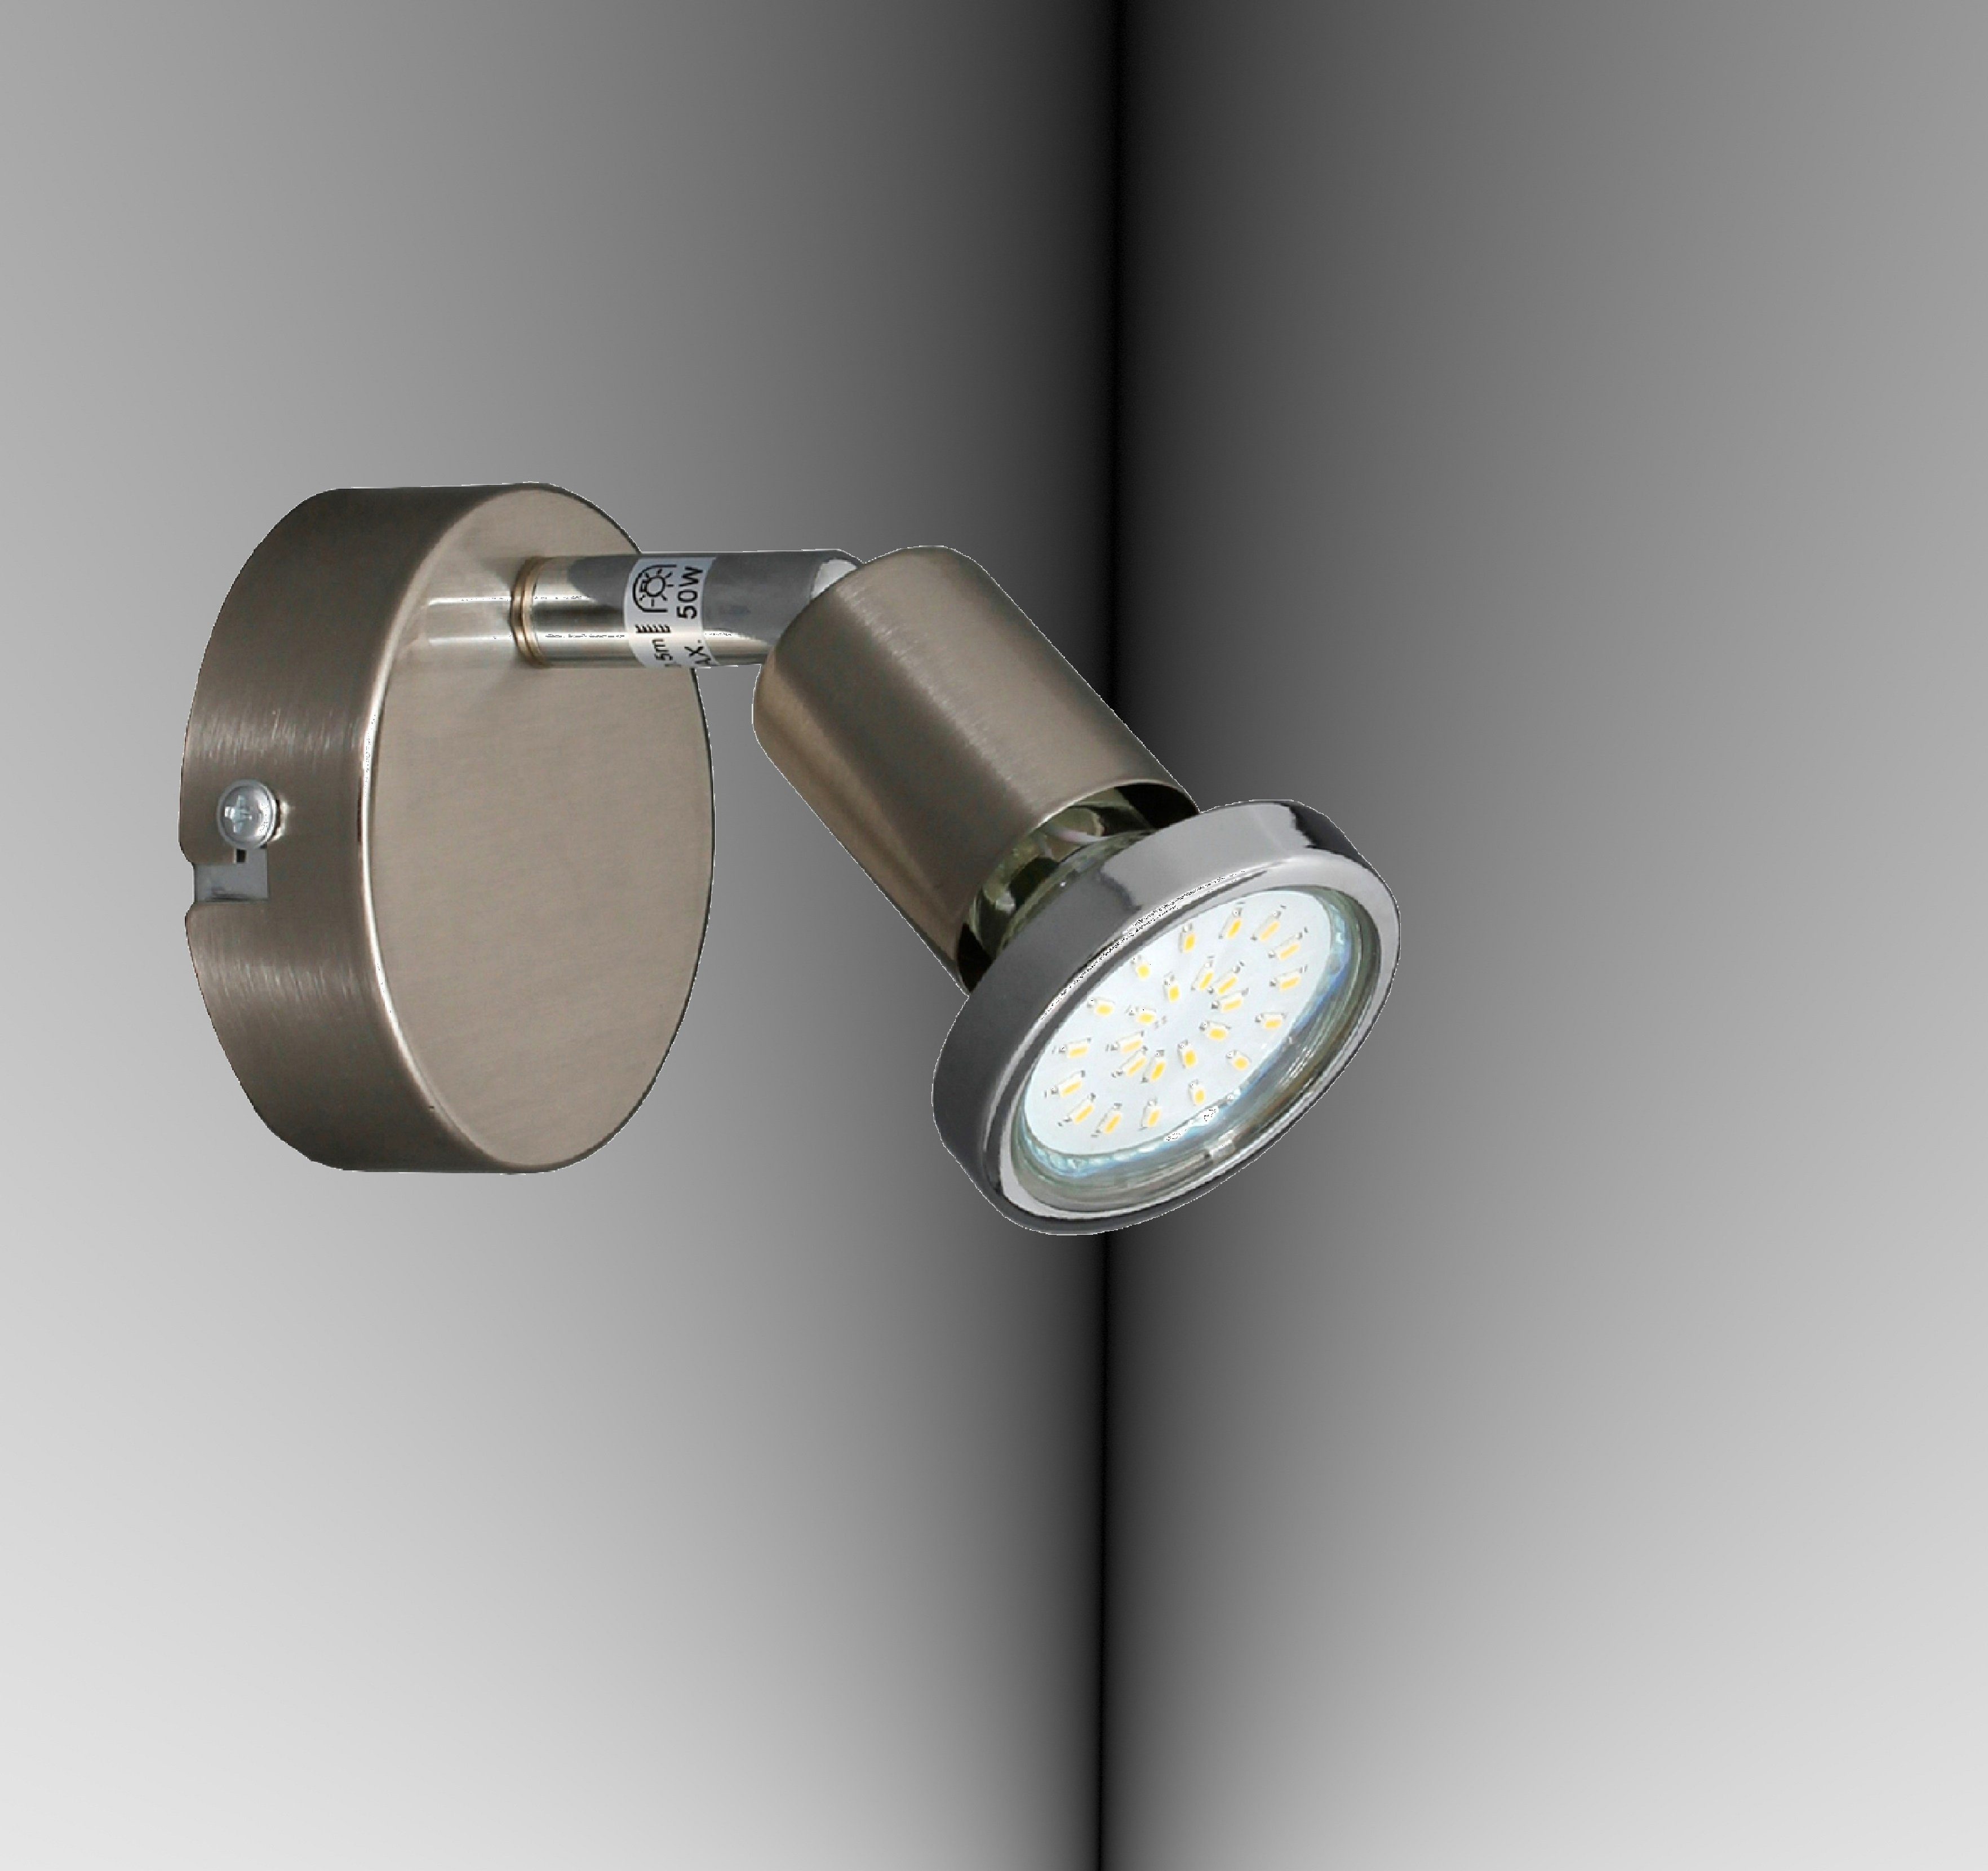 LED Decken Strahler drehbar 8W Wand Leuchte Spot Balken Chrom Ring Küche Lampe